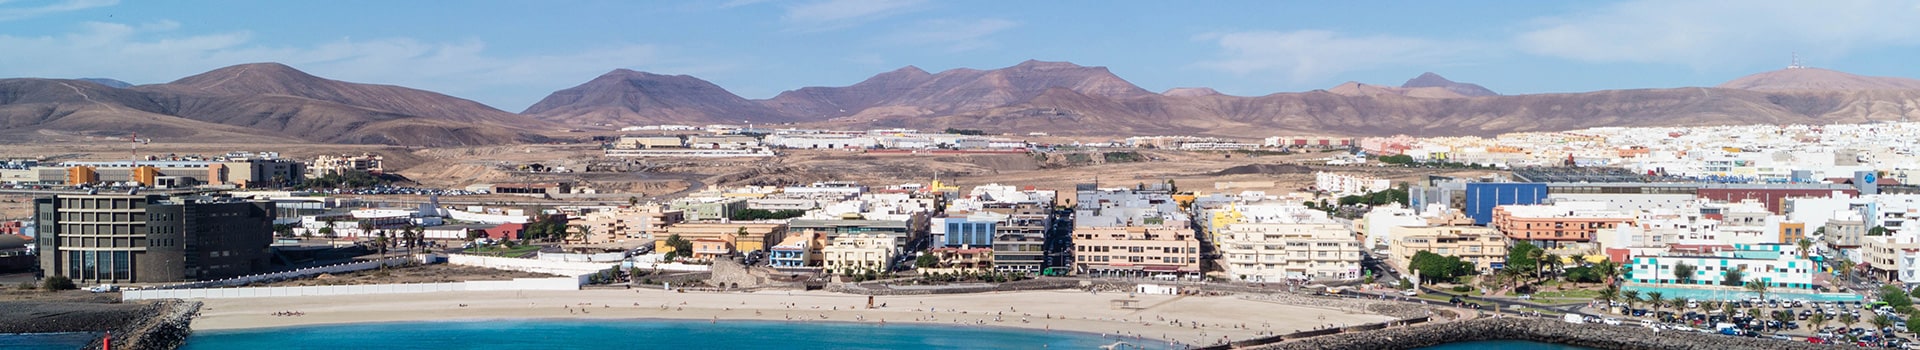 Ponta Delgada - Fuerteventura